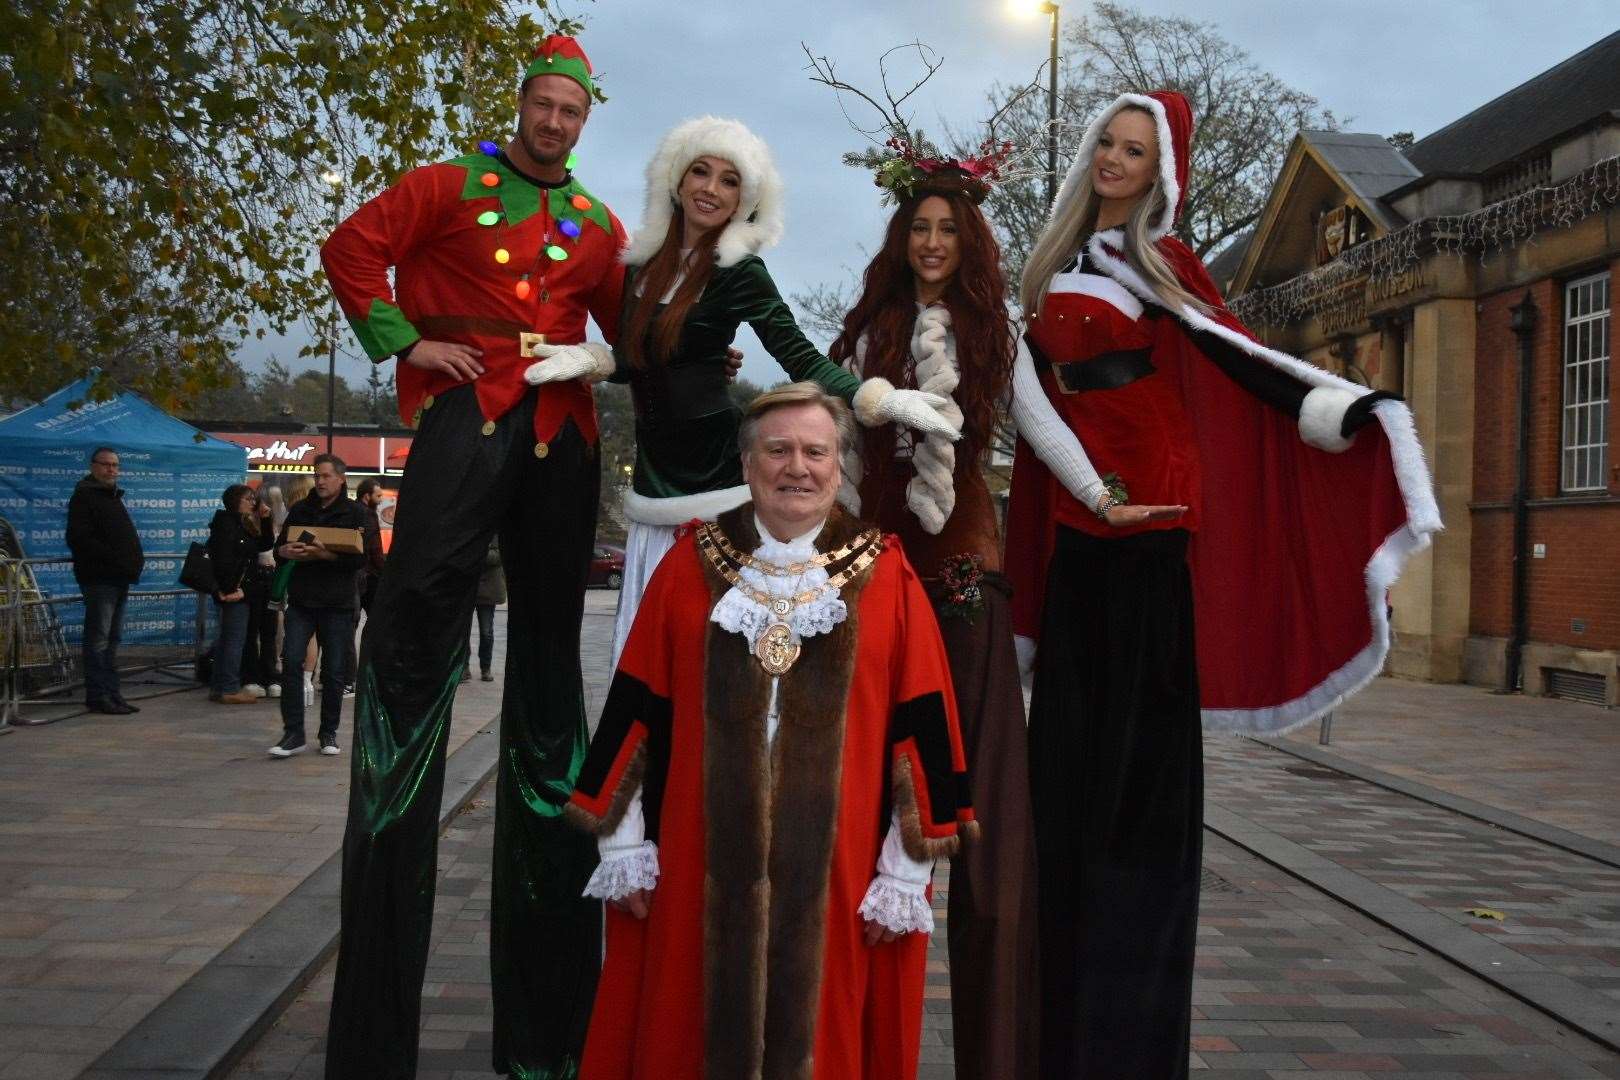 Mayor of Dartford Cllr Paul Cutler joined the fun. Picture: Jason Arthur